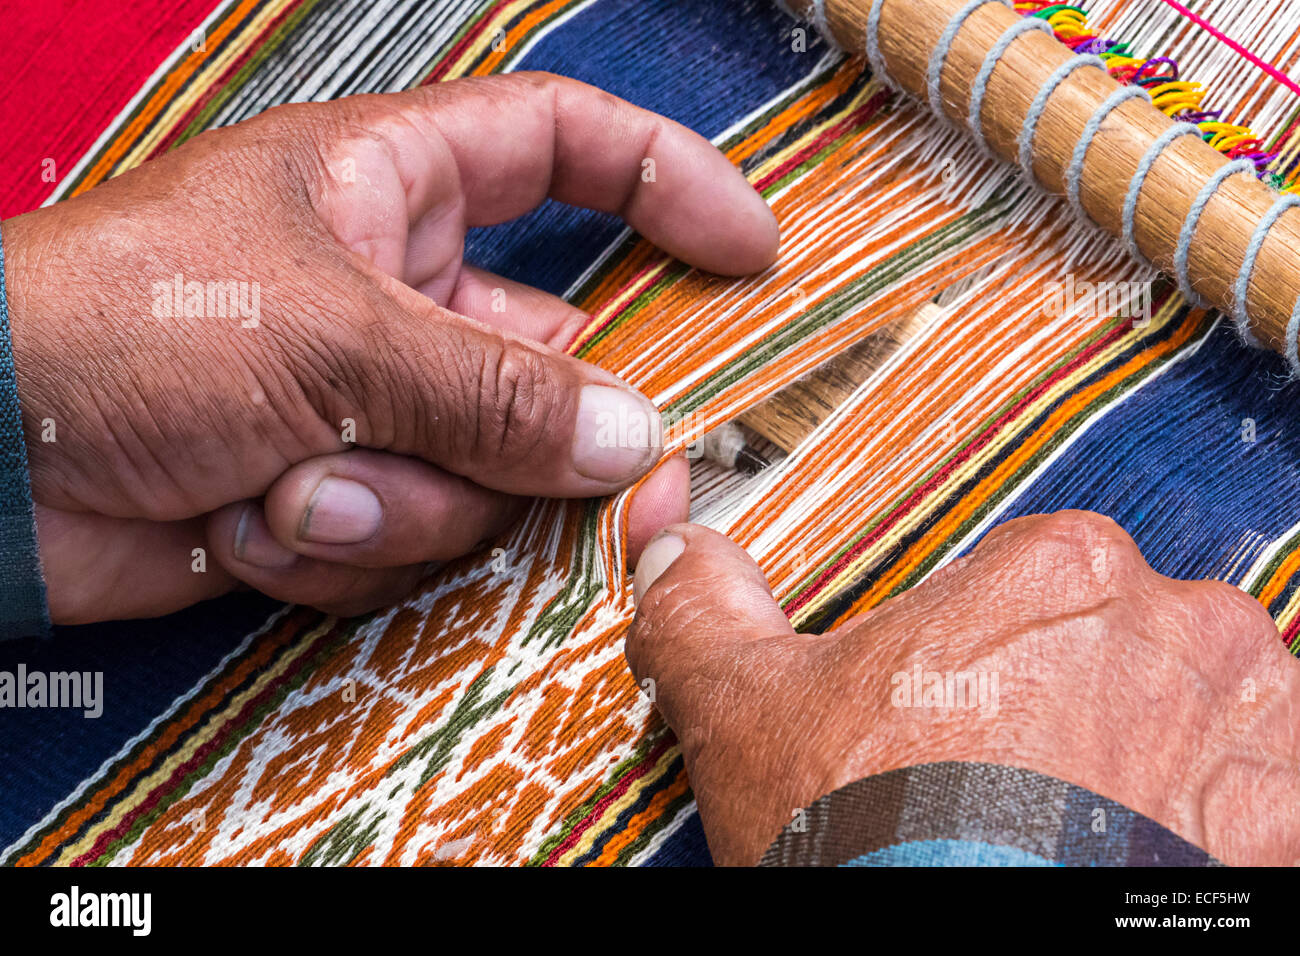 Peruan weaver weaves traditional  carpet Stock Photo